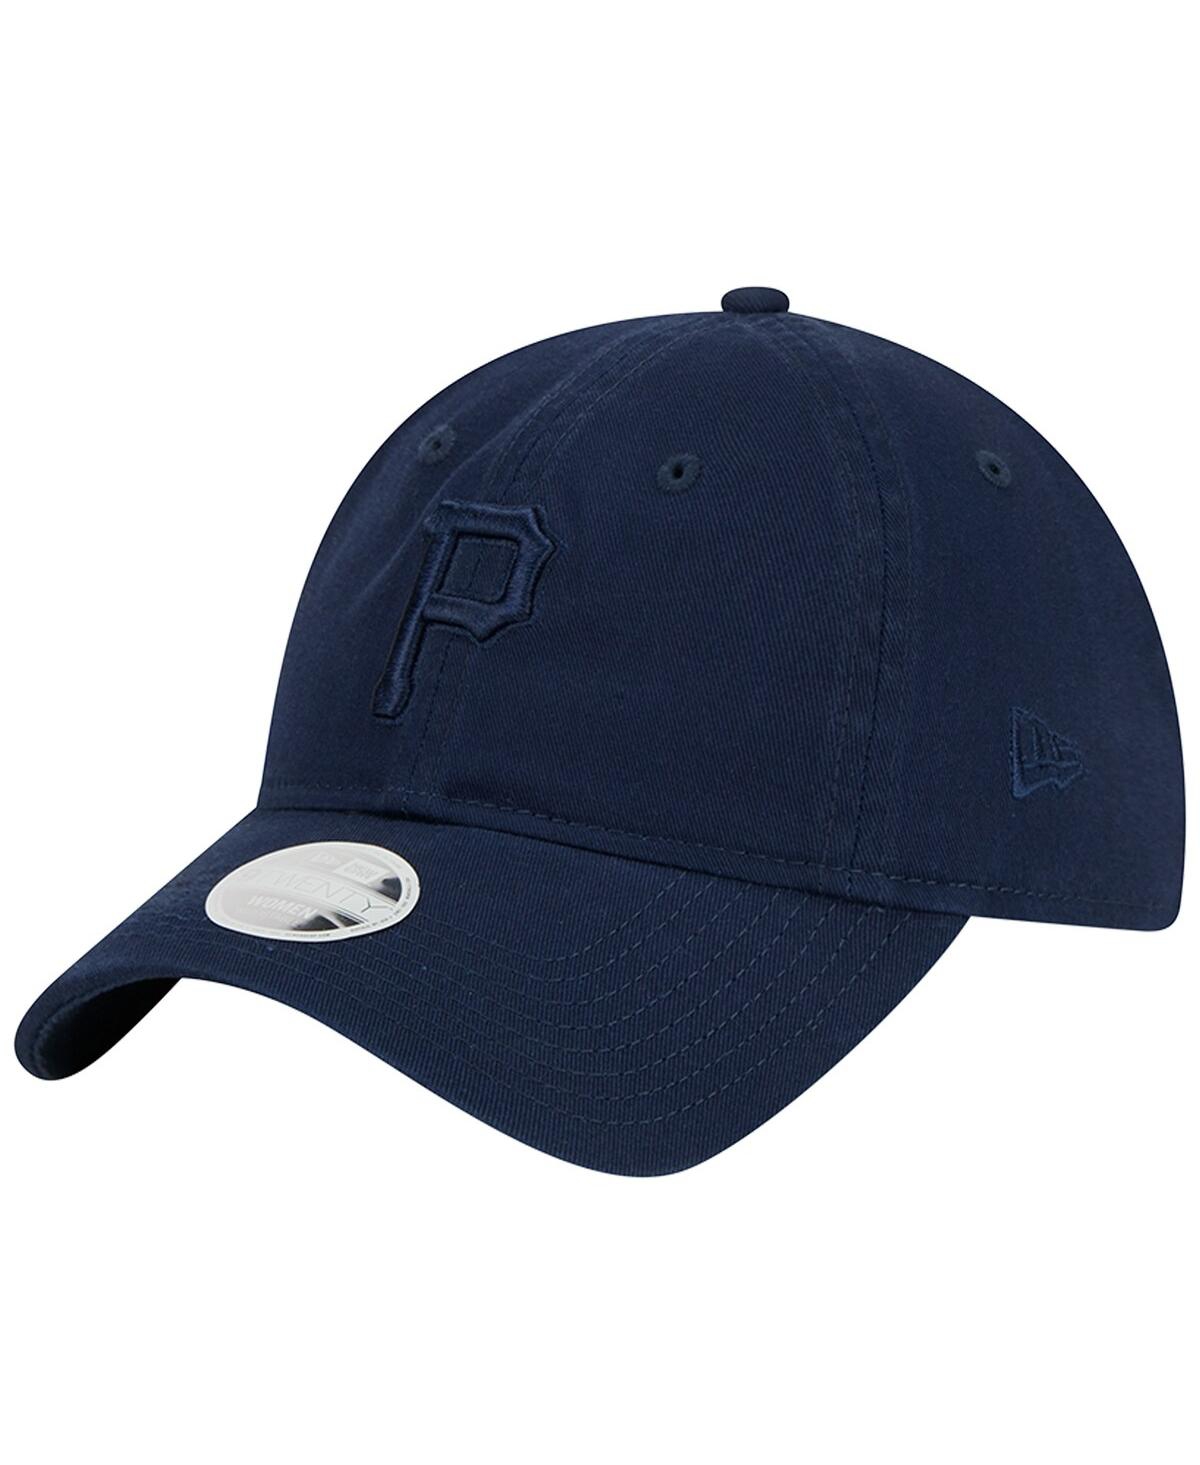 Women's New Era Navy Pittsburgh Pirates Color Pack 9TWENTY Adjustable Hat - Navy